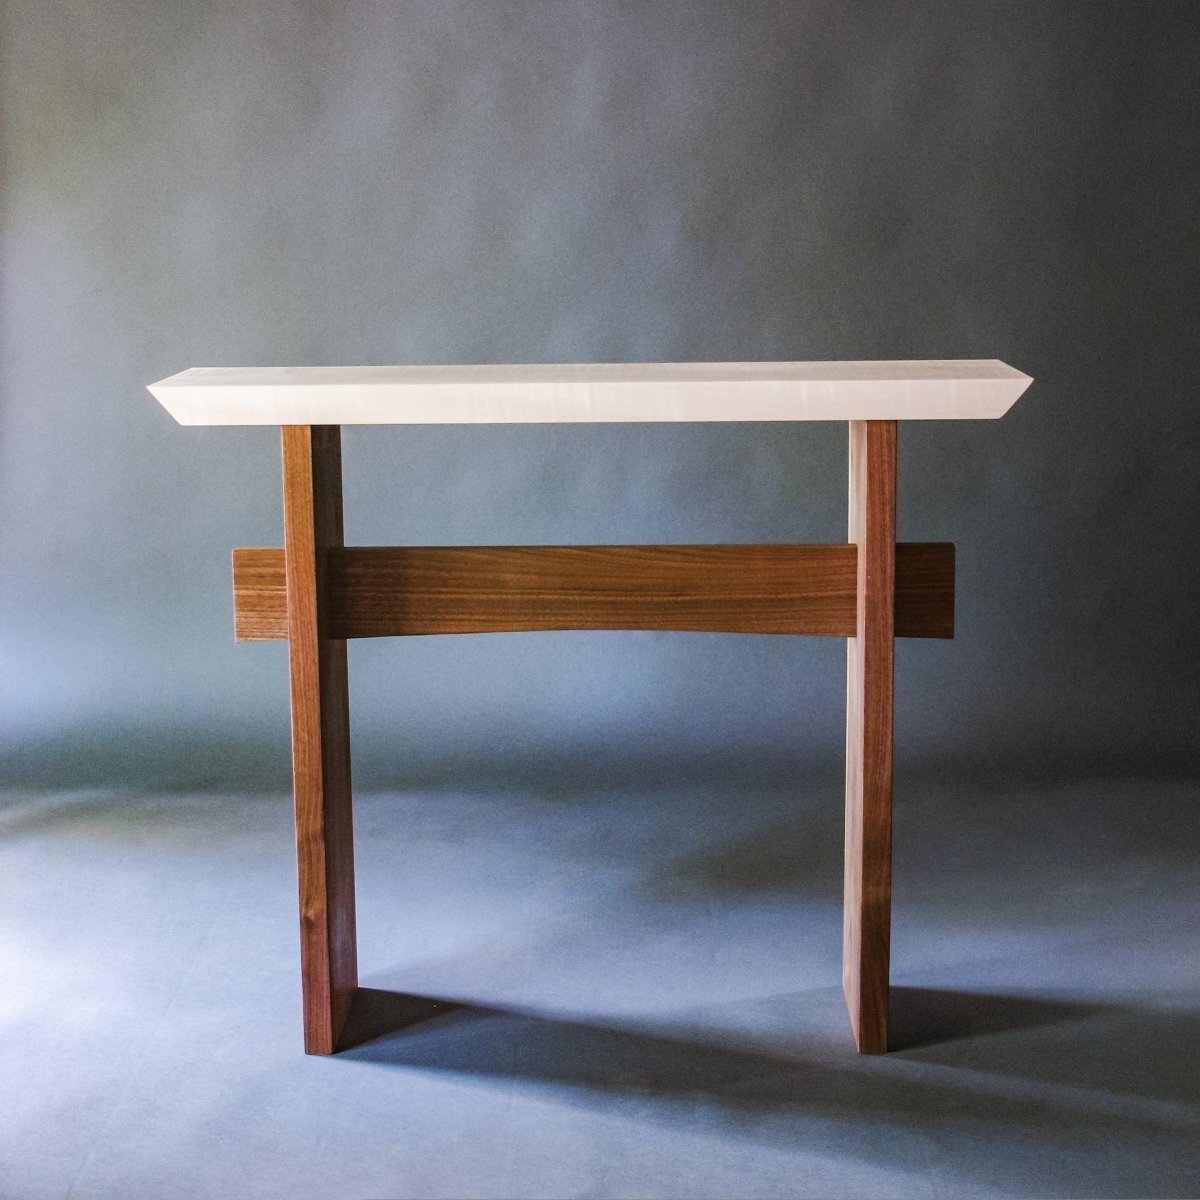 zen decor hall table - narrow console table for entryways by Mokuzai Furniture